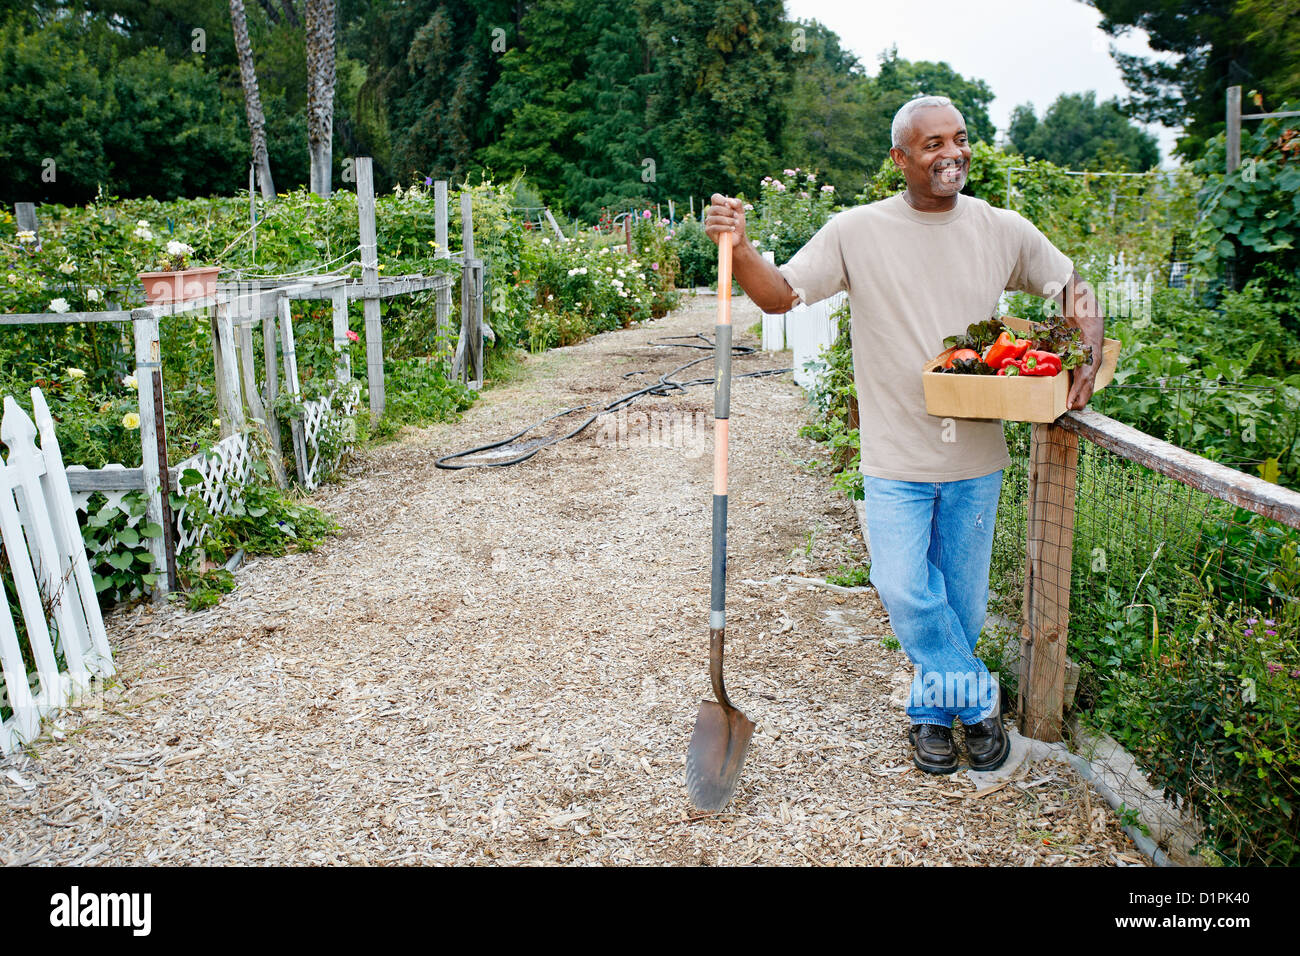 Black man gathering vegetables in community garden Stock Photo